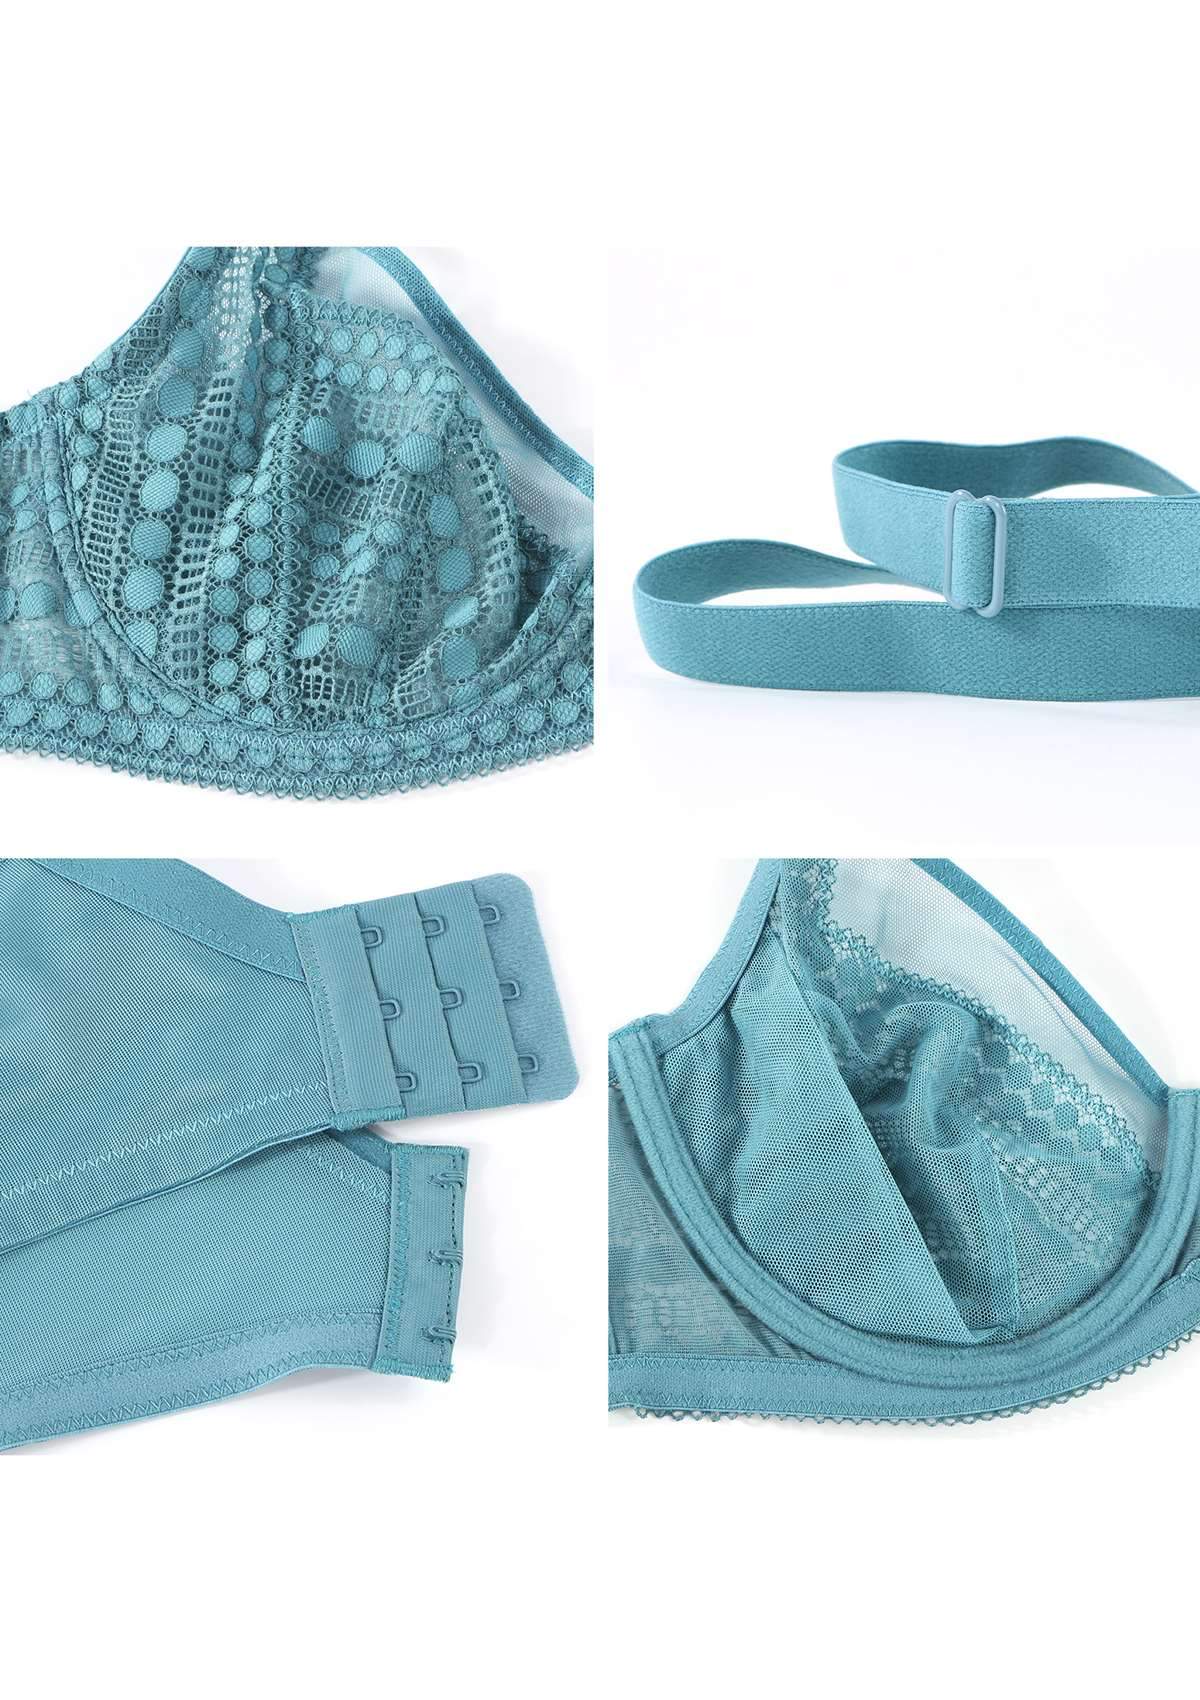 HSIA Heroine Matching Bra And Underwear Set: Bra For Big Boobs - Brittany Blue / 42 / DDD/F